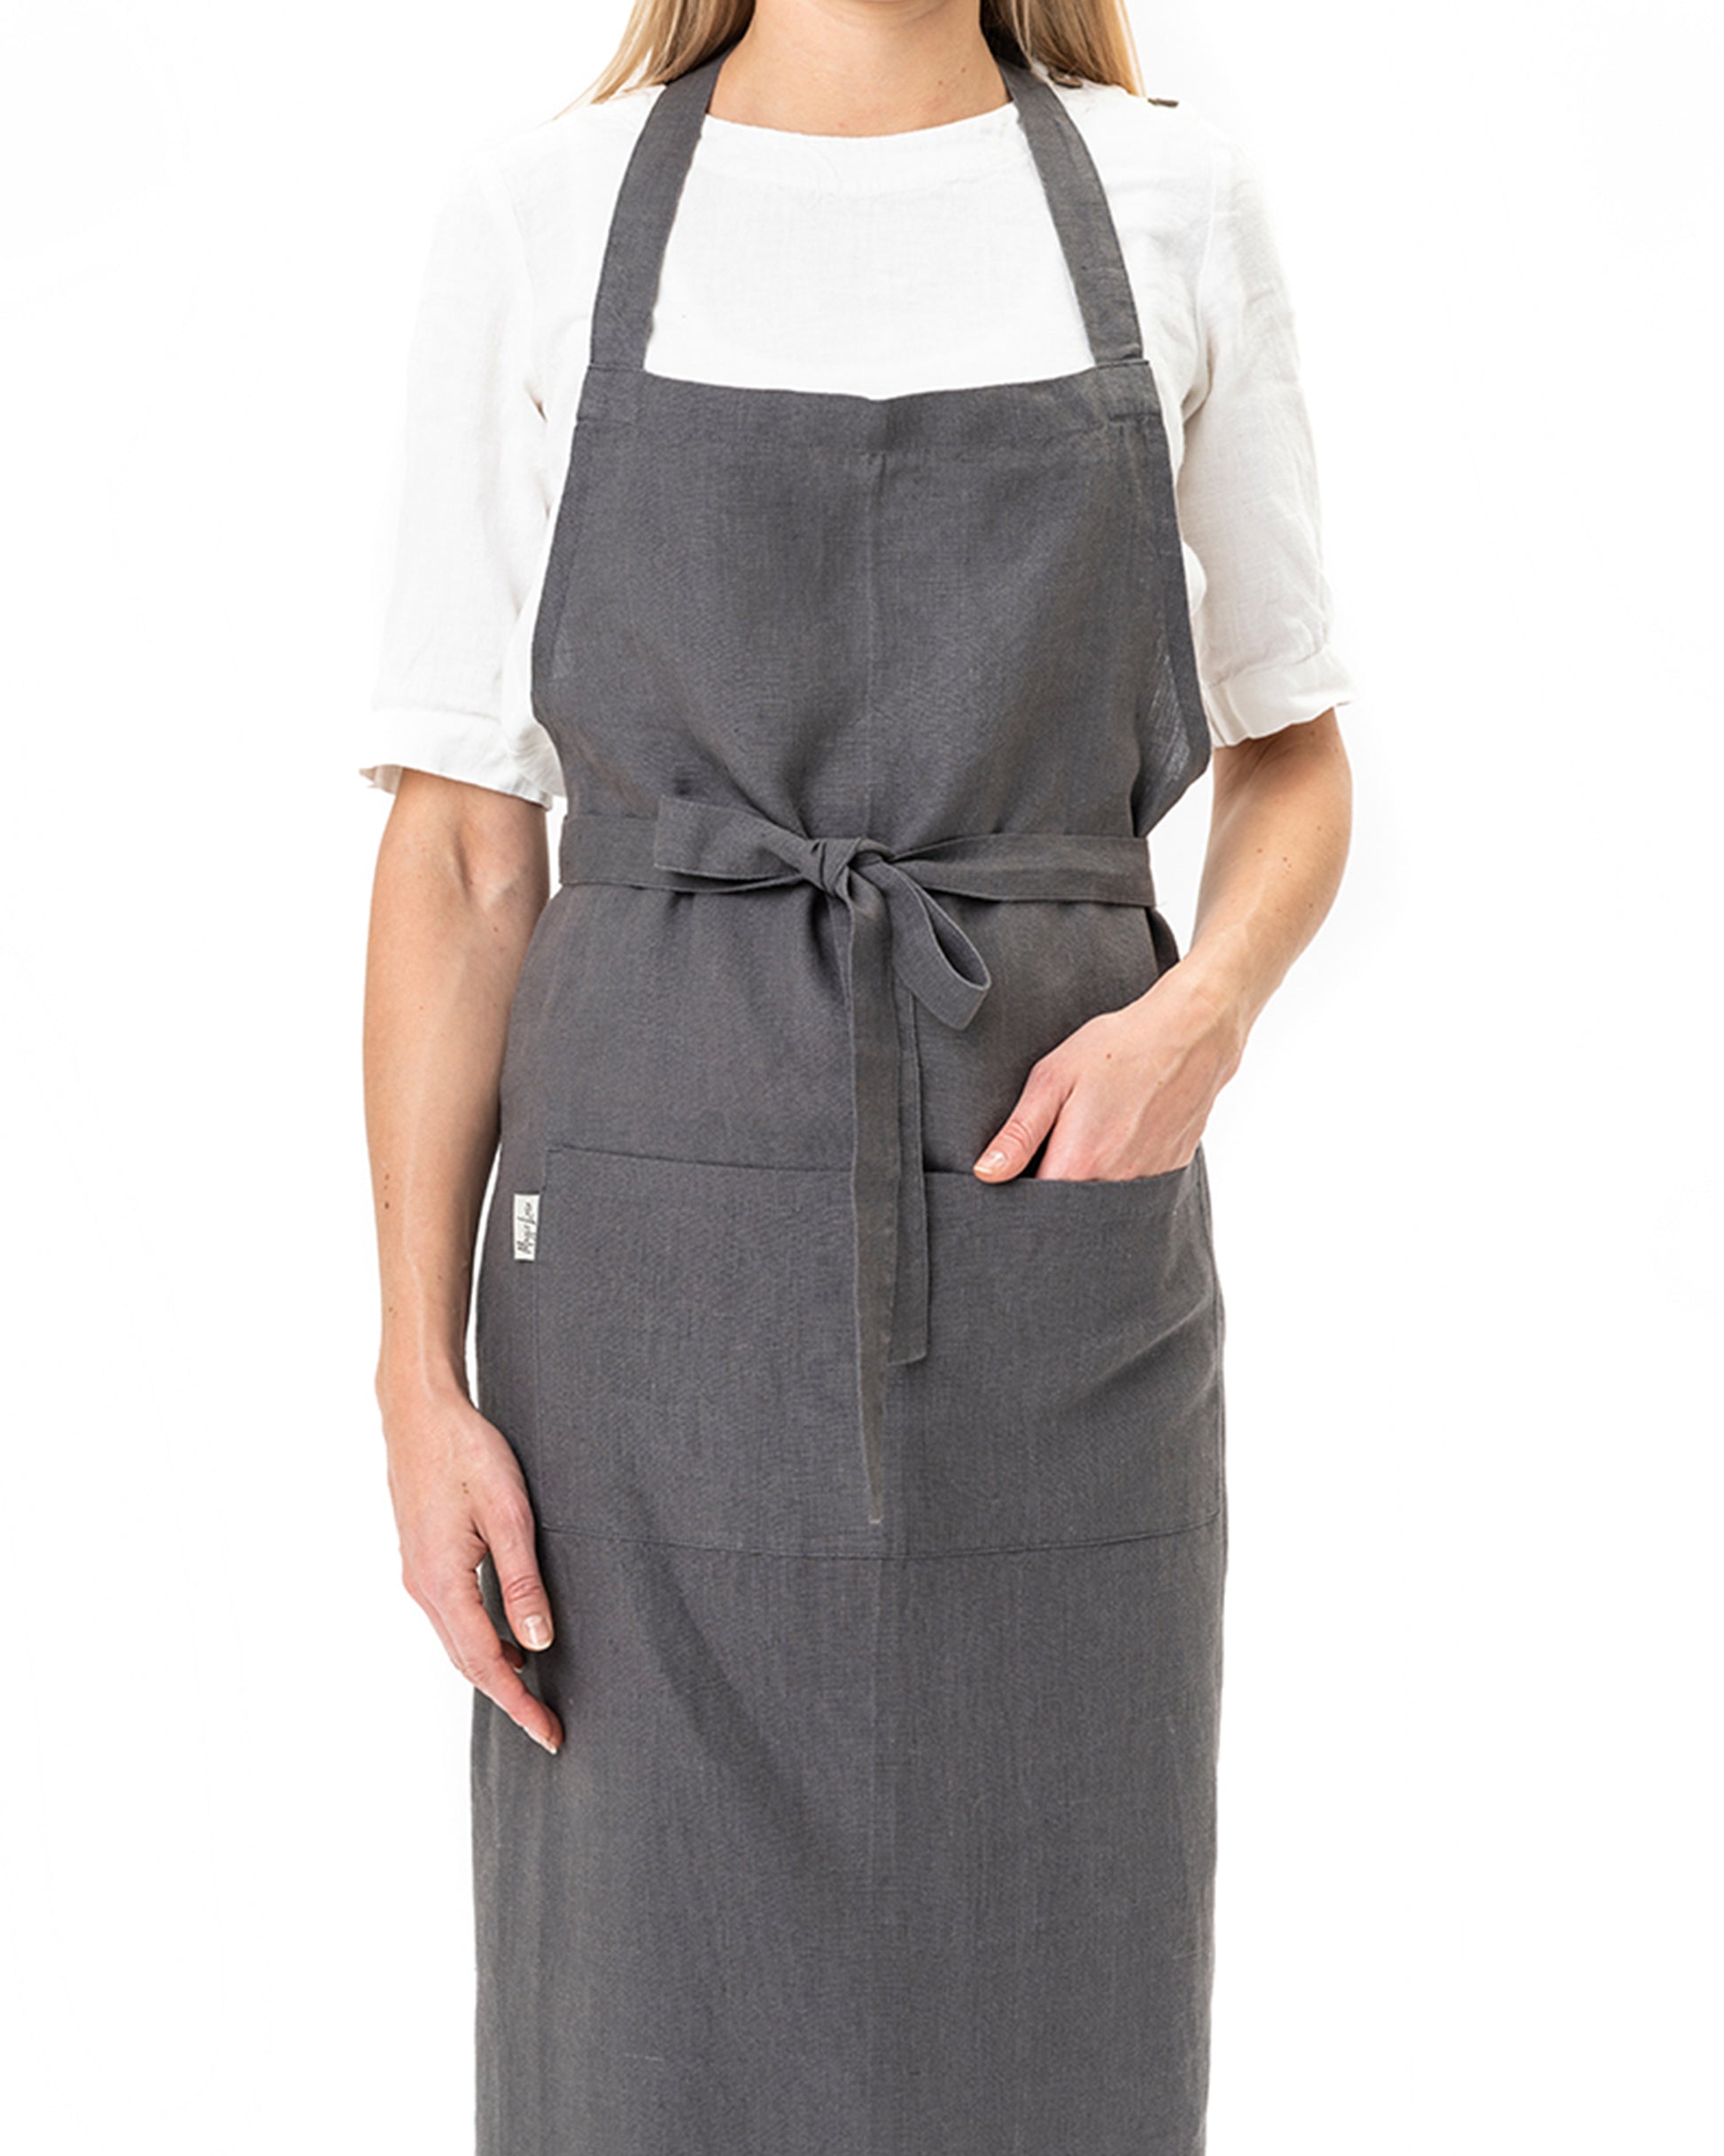 Linen bib apron in Charcoal gray - MagicLinen